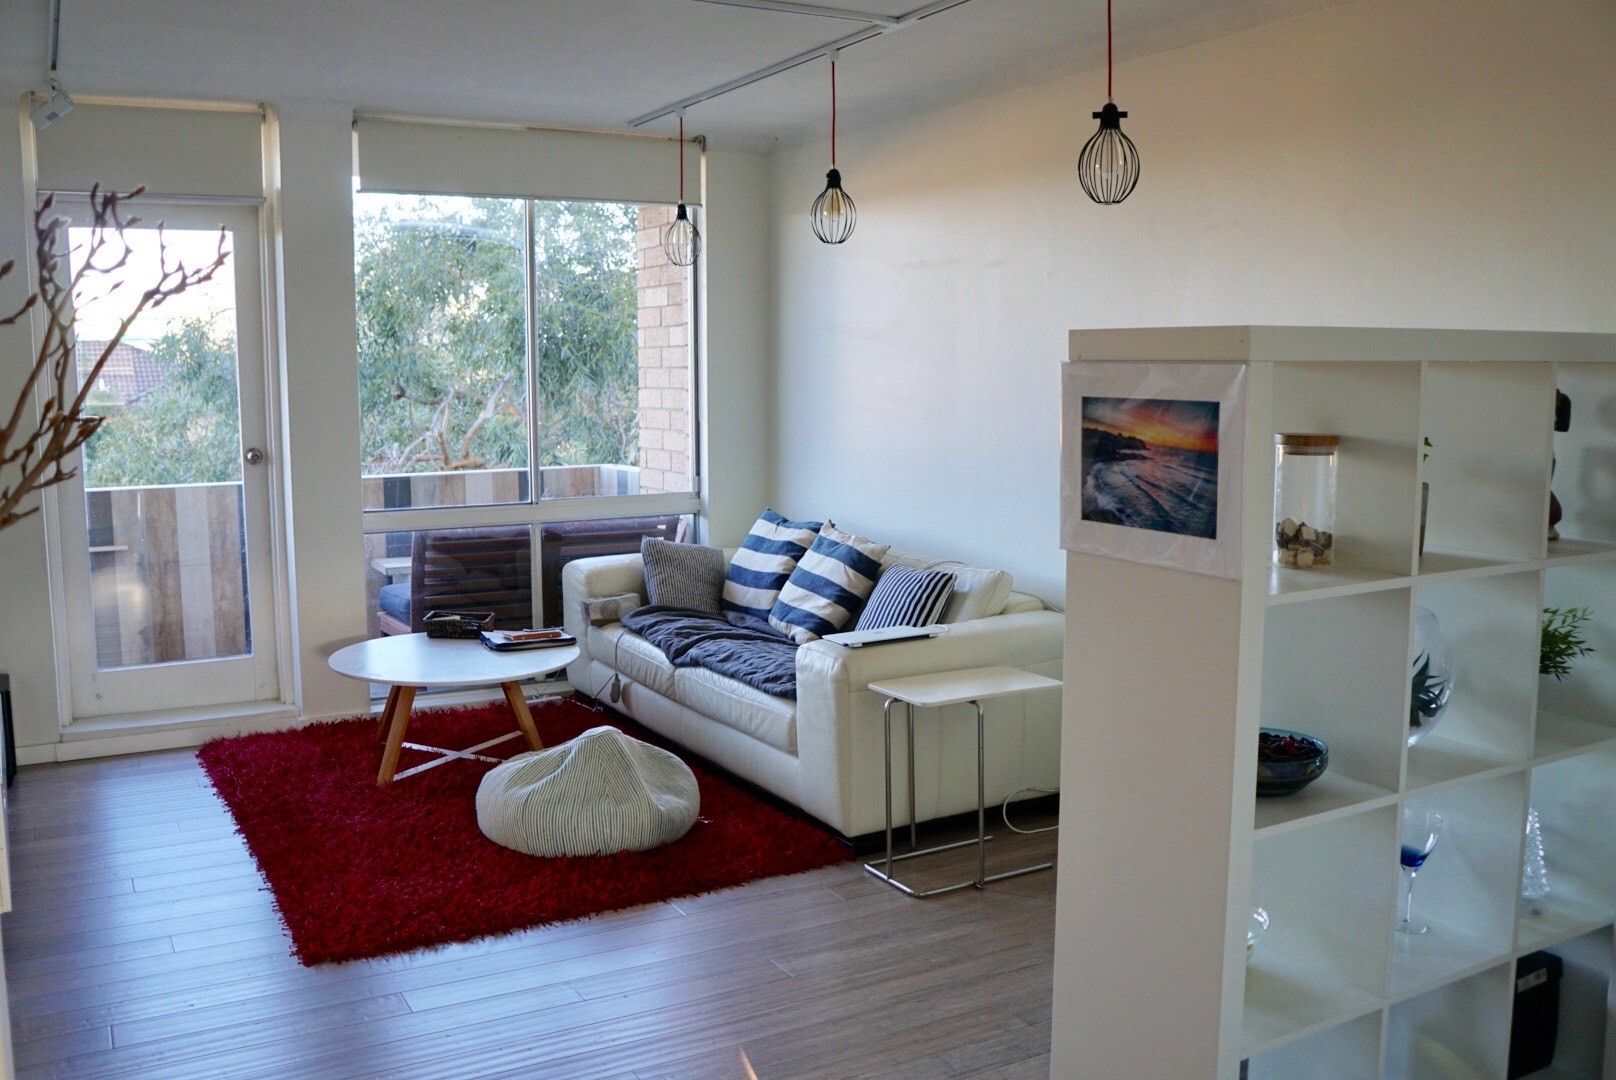 2 bedrooms Apartment / Unit / Flat in 9/38-44 O'Brien Street BONDI BEACH NSW, 2026